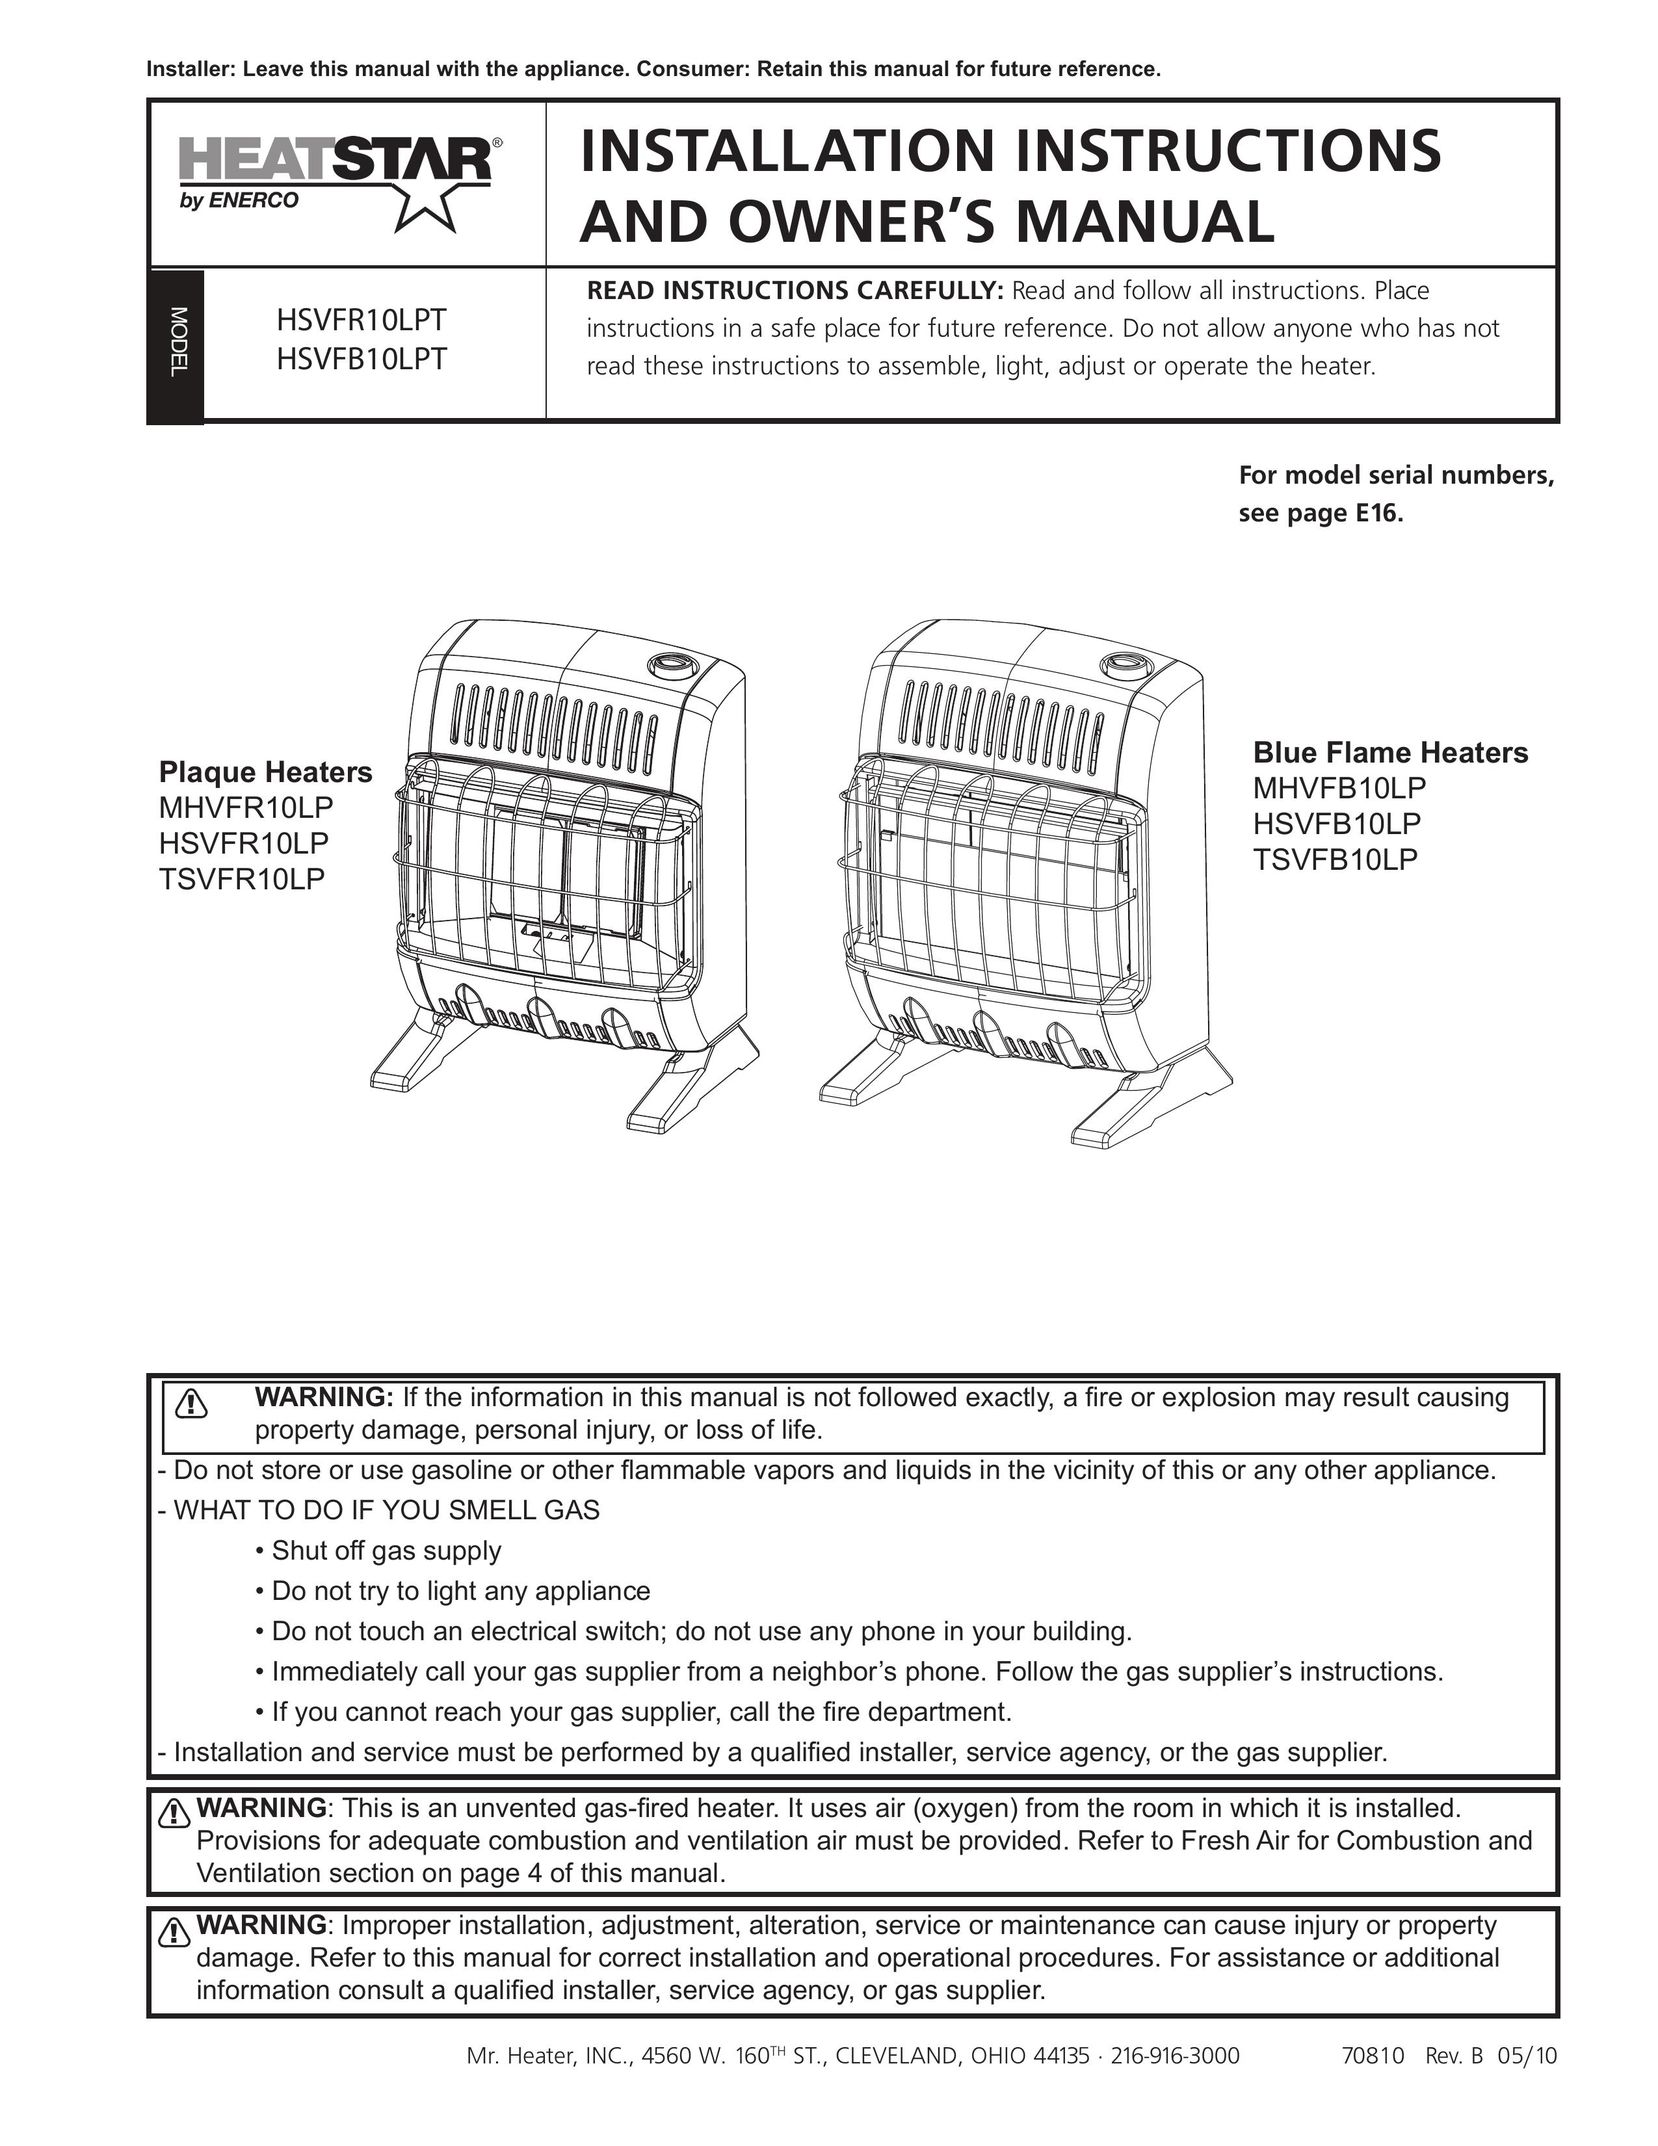 Enerco HSVFB10LPT Gas Heater User Manual